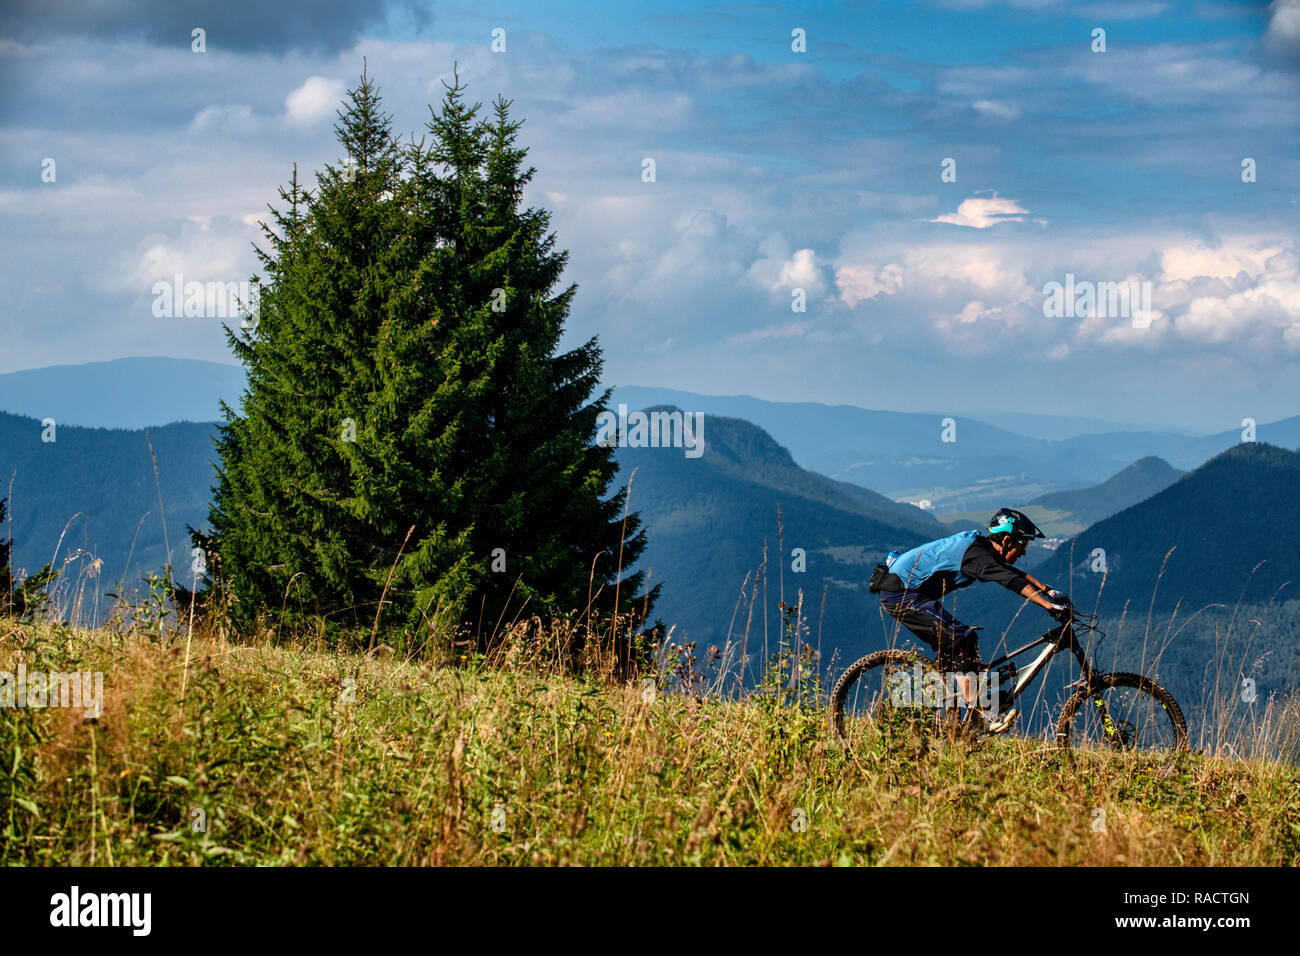 A man rides a mountain bike at Malinô Brdo bike park near Ružomberok in Slovakia. Stock Photo